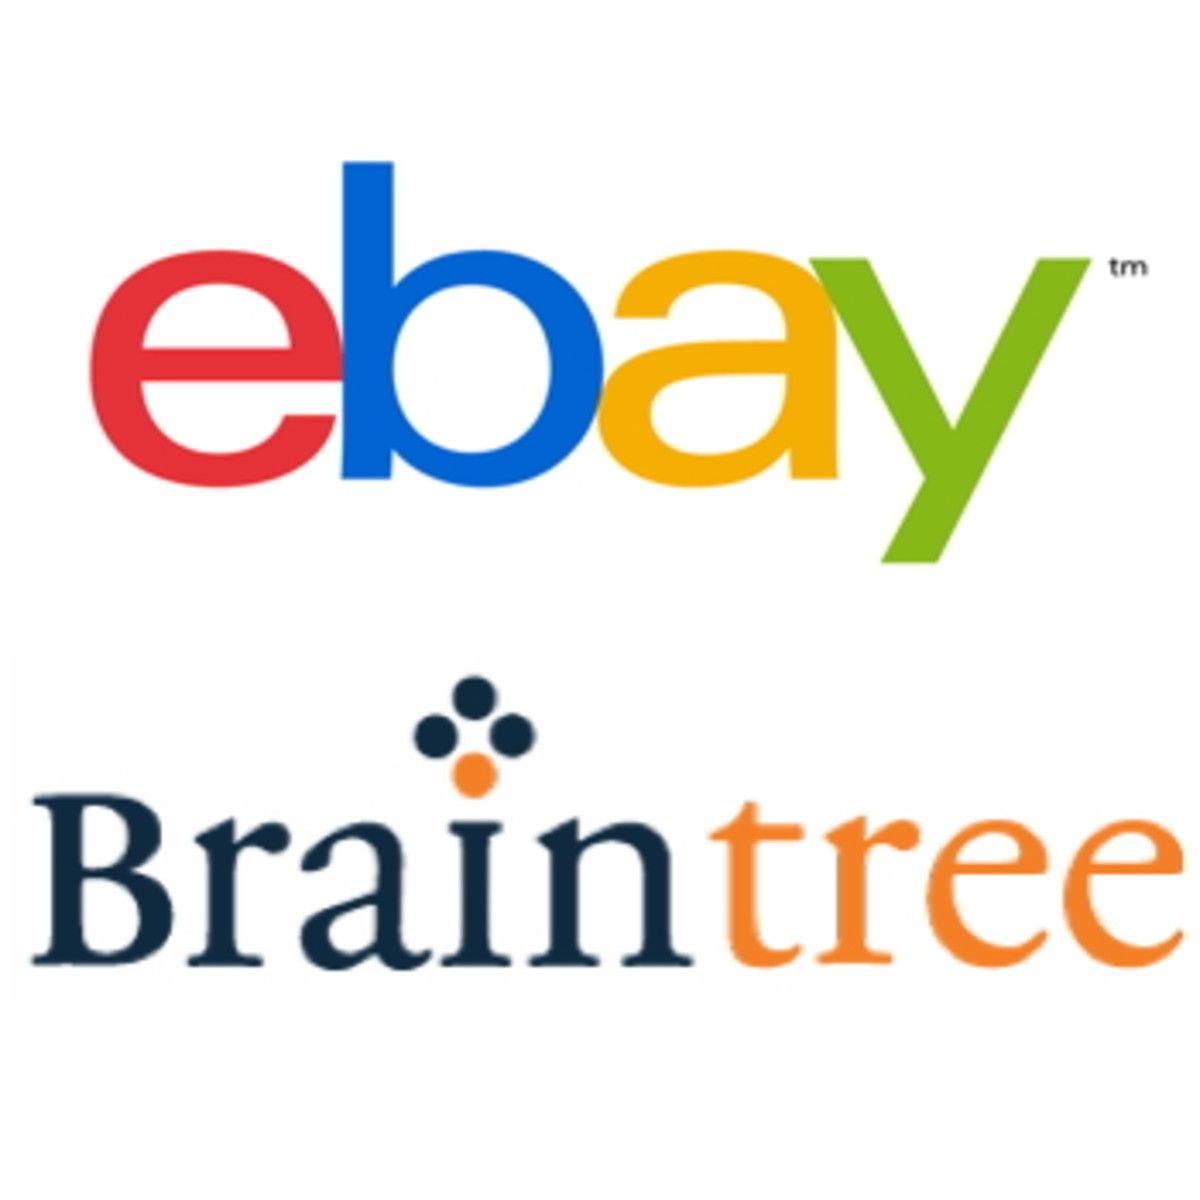 Briantree Logo - eBay to buy Braintree to strengthen PayPal on mobiles - PC Retail